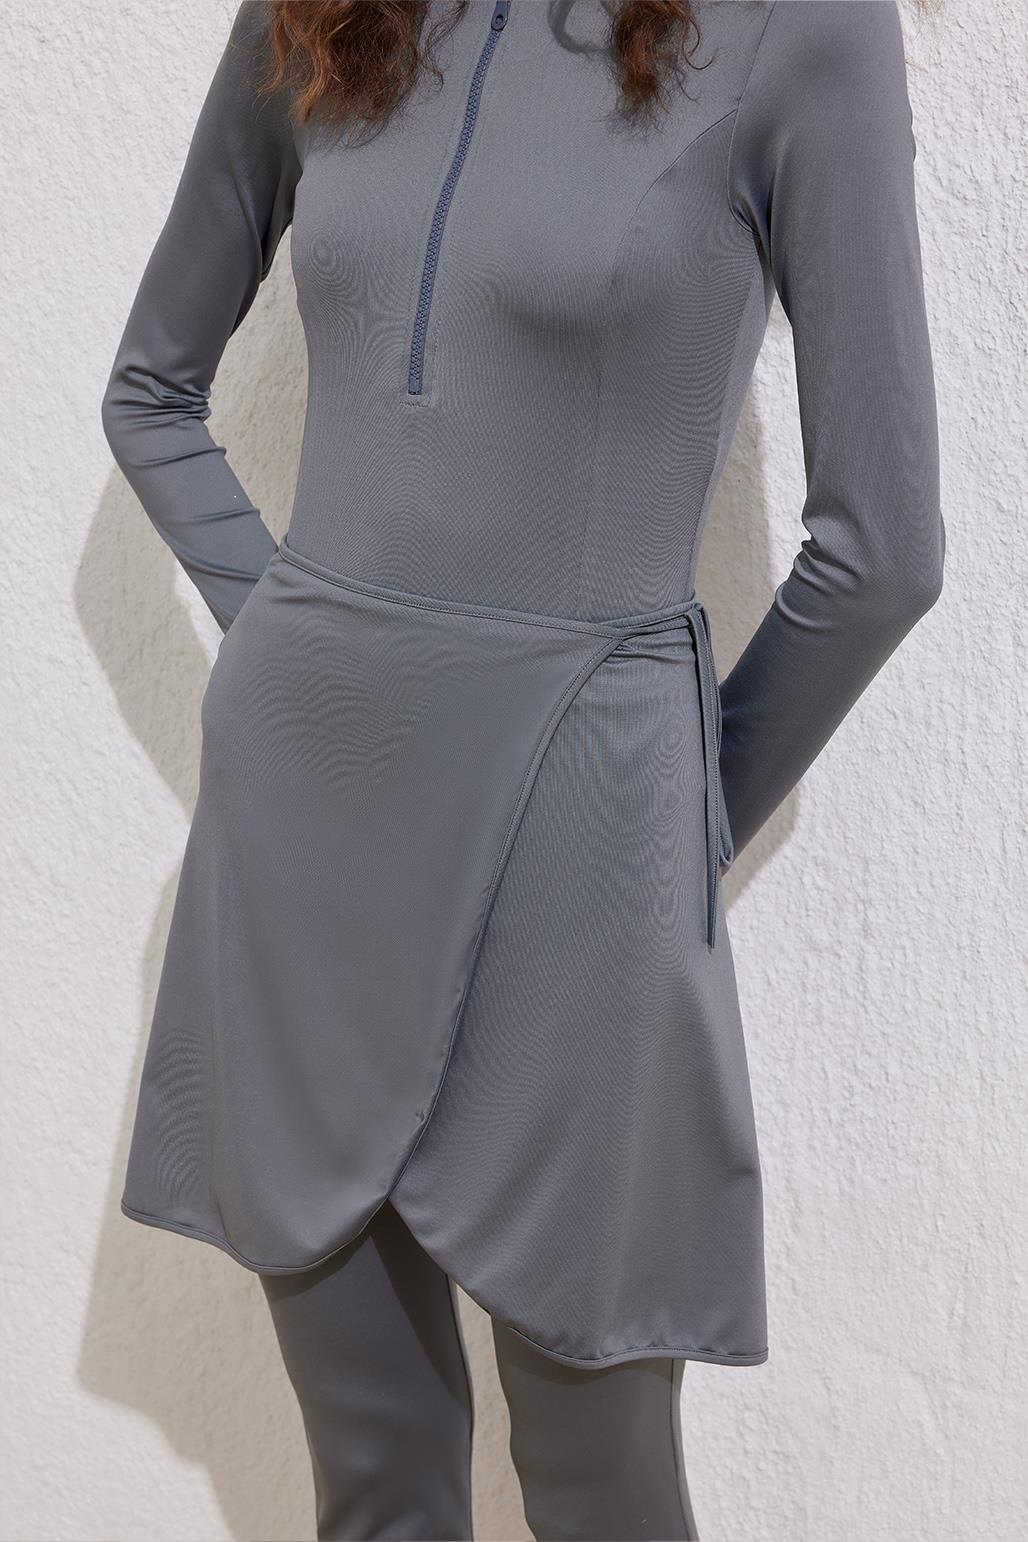 Modest Swimwear Connectable Skirt Gray